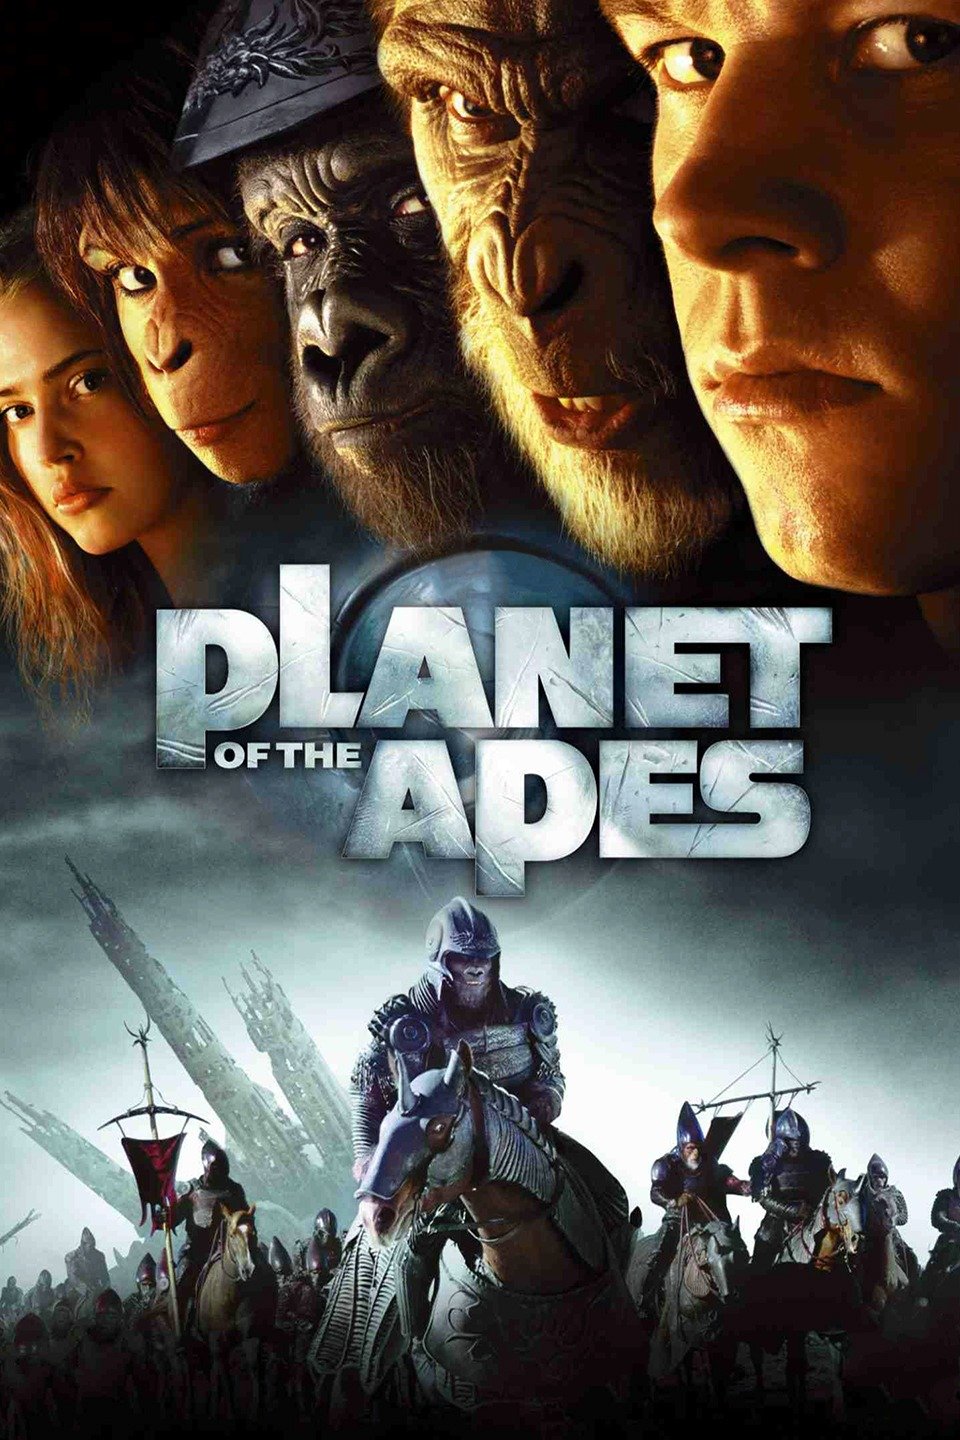 [MINI-HD] Planet of the Apes (2001) พิภพวานร [1080p] [พากย์ไทย 5.1 + อังกฤษ DTS] [บรรยายไทย + อังกฤษ] [เสียงไทย + ซับไทย] [ONE2UP]